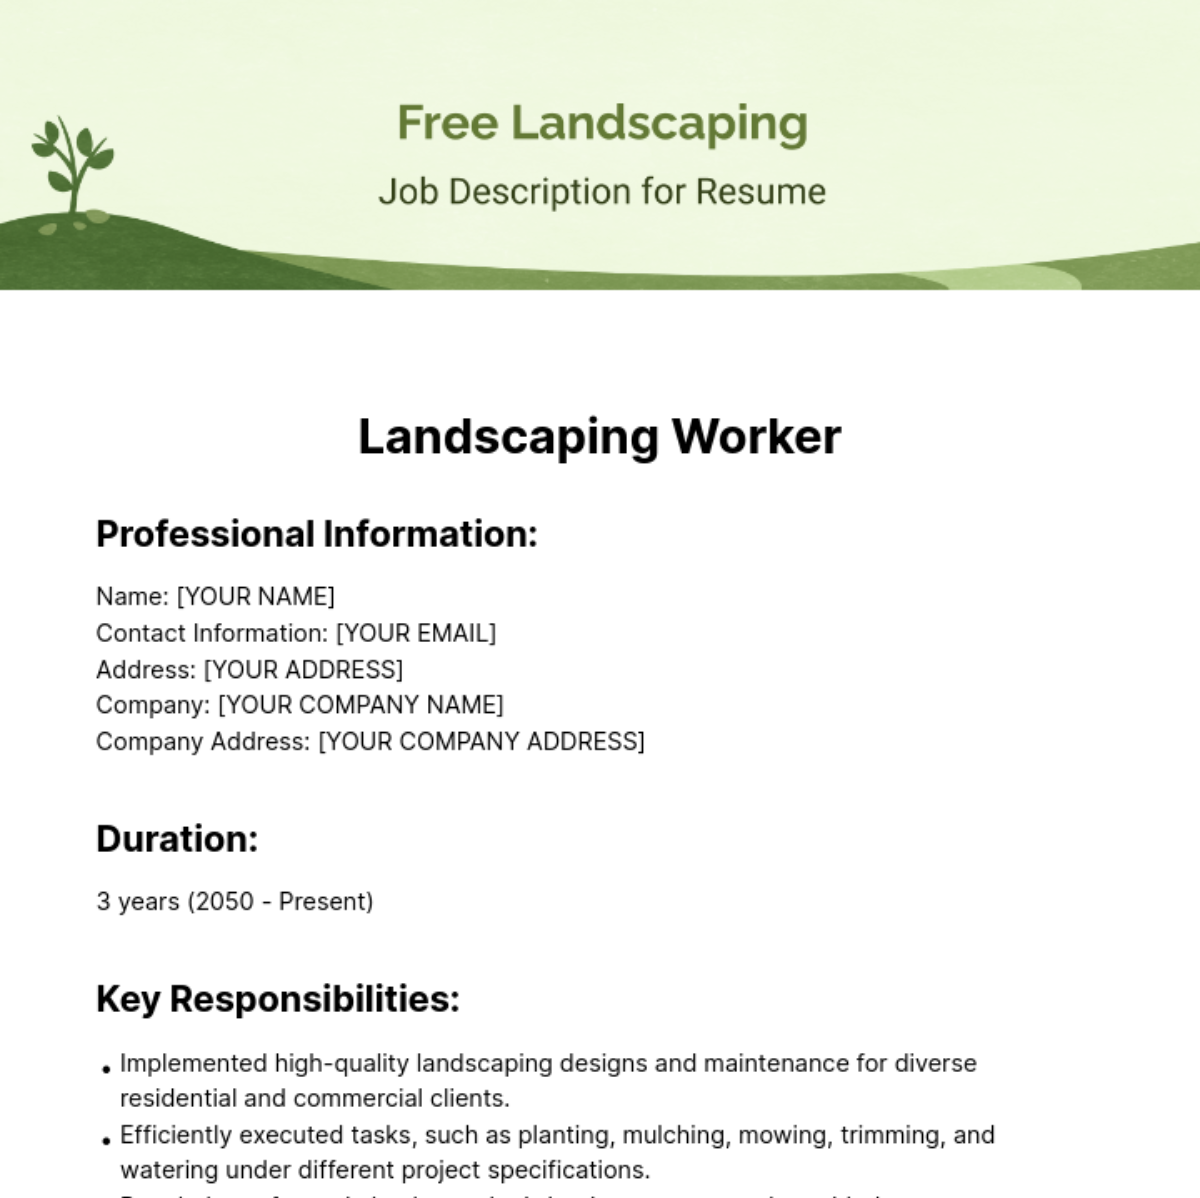 Free Landscaping Job Description for Resume Template